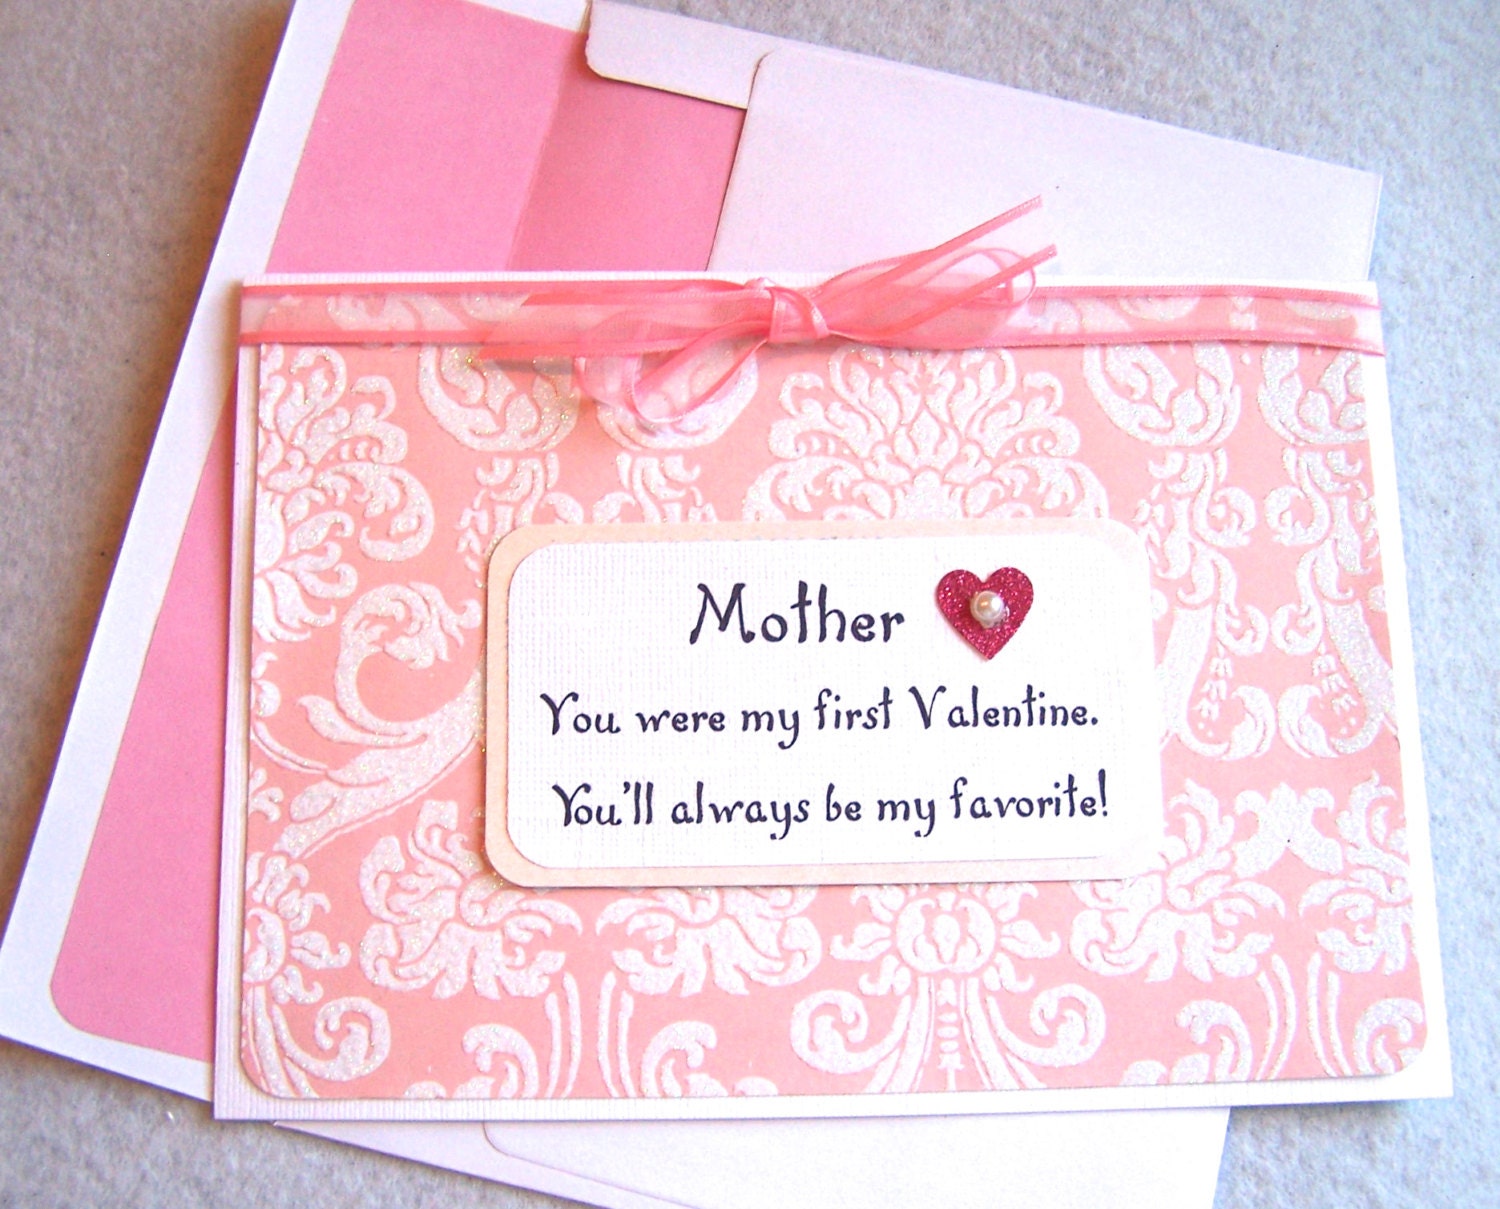 valentine-card-for-mother-by-sentimentsbydesign1-on-etsy